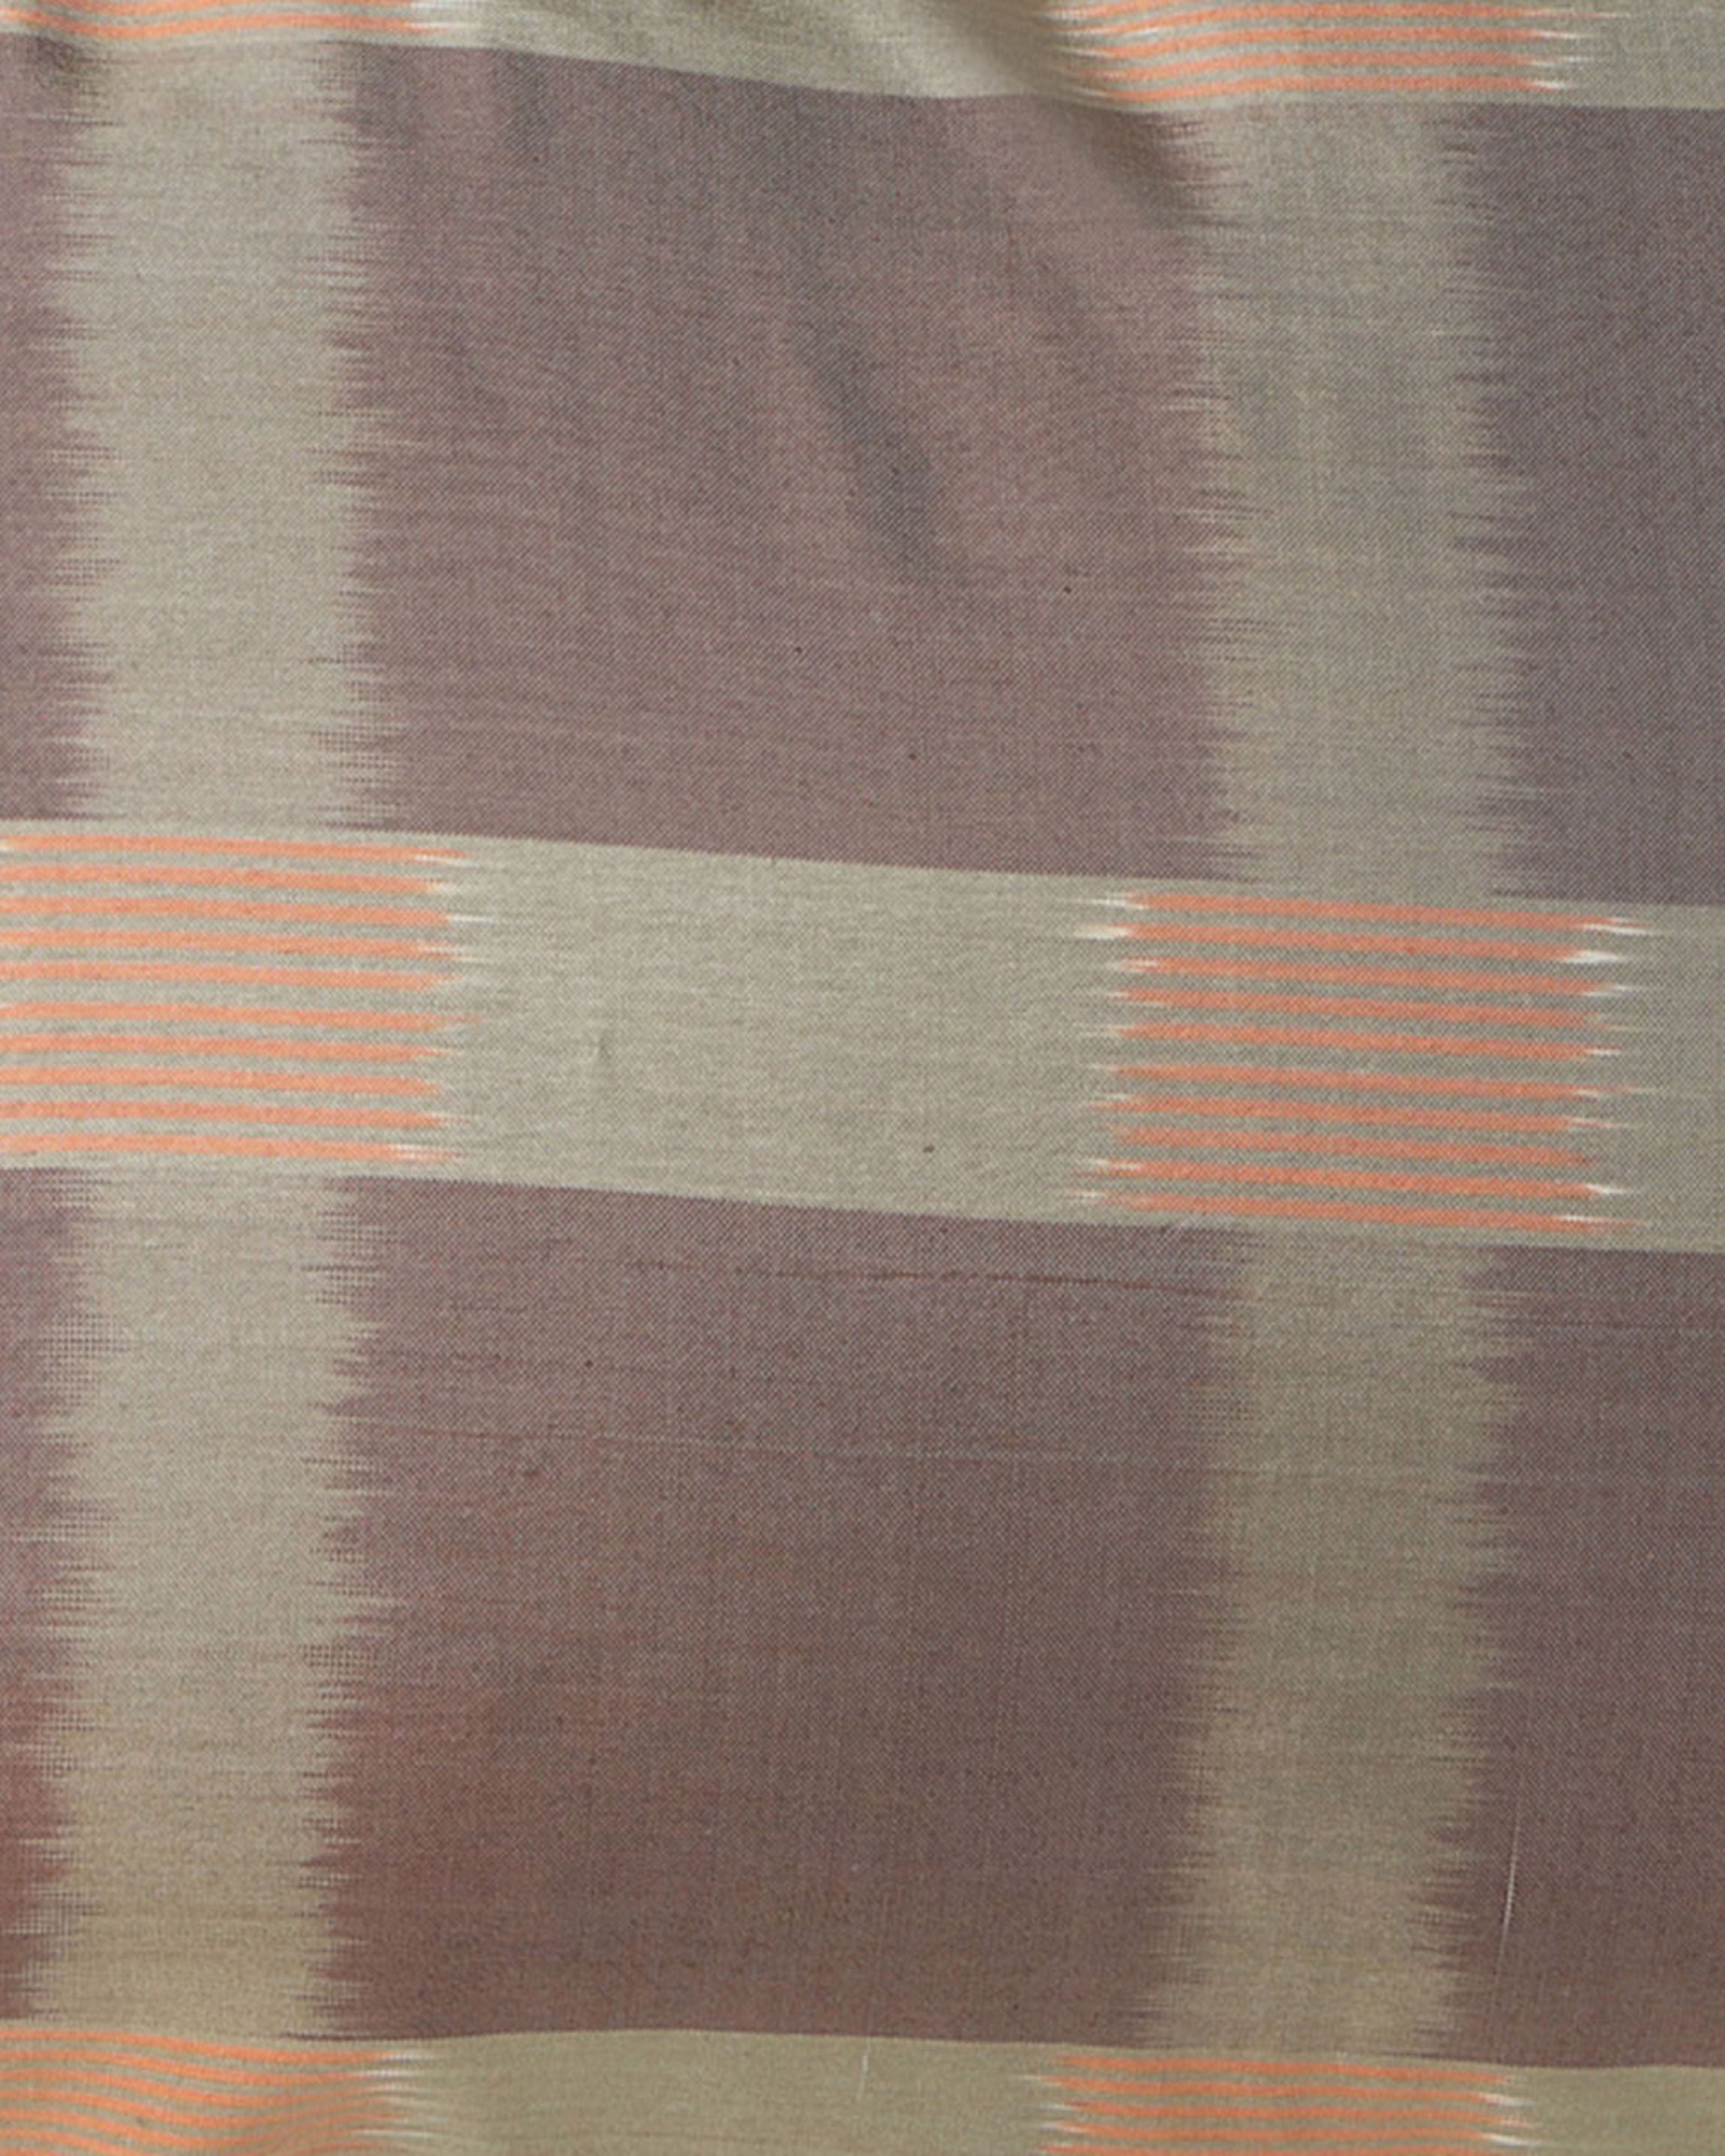 Tile Weft Ikat Silk Cushion Cover - Medium Brown